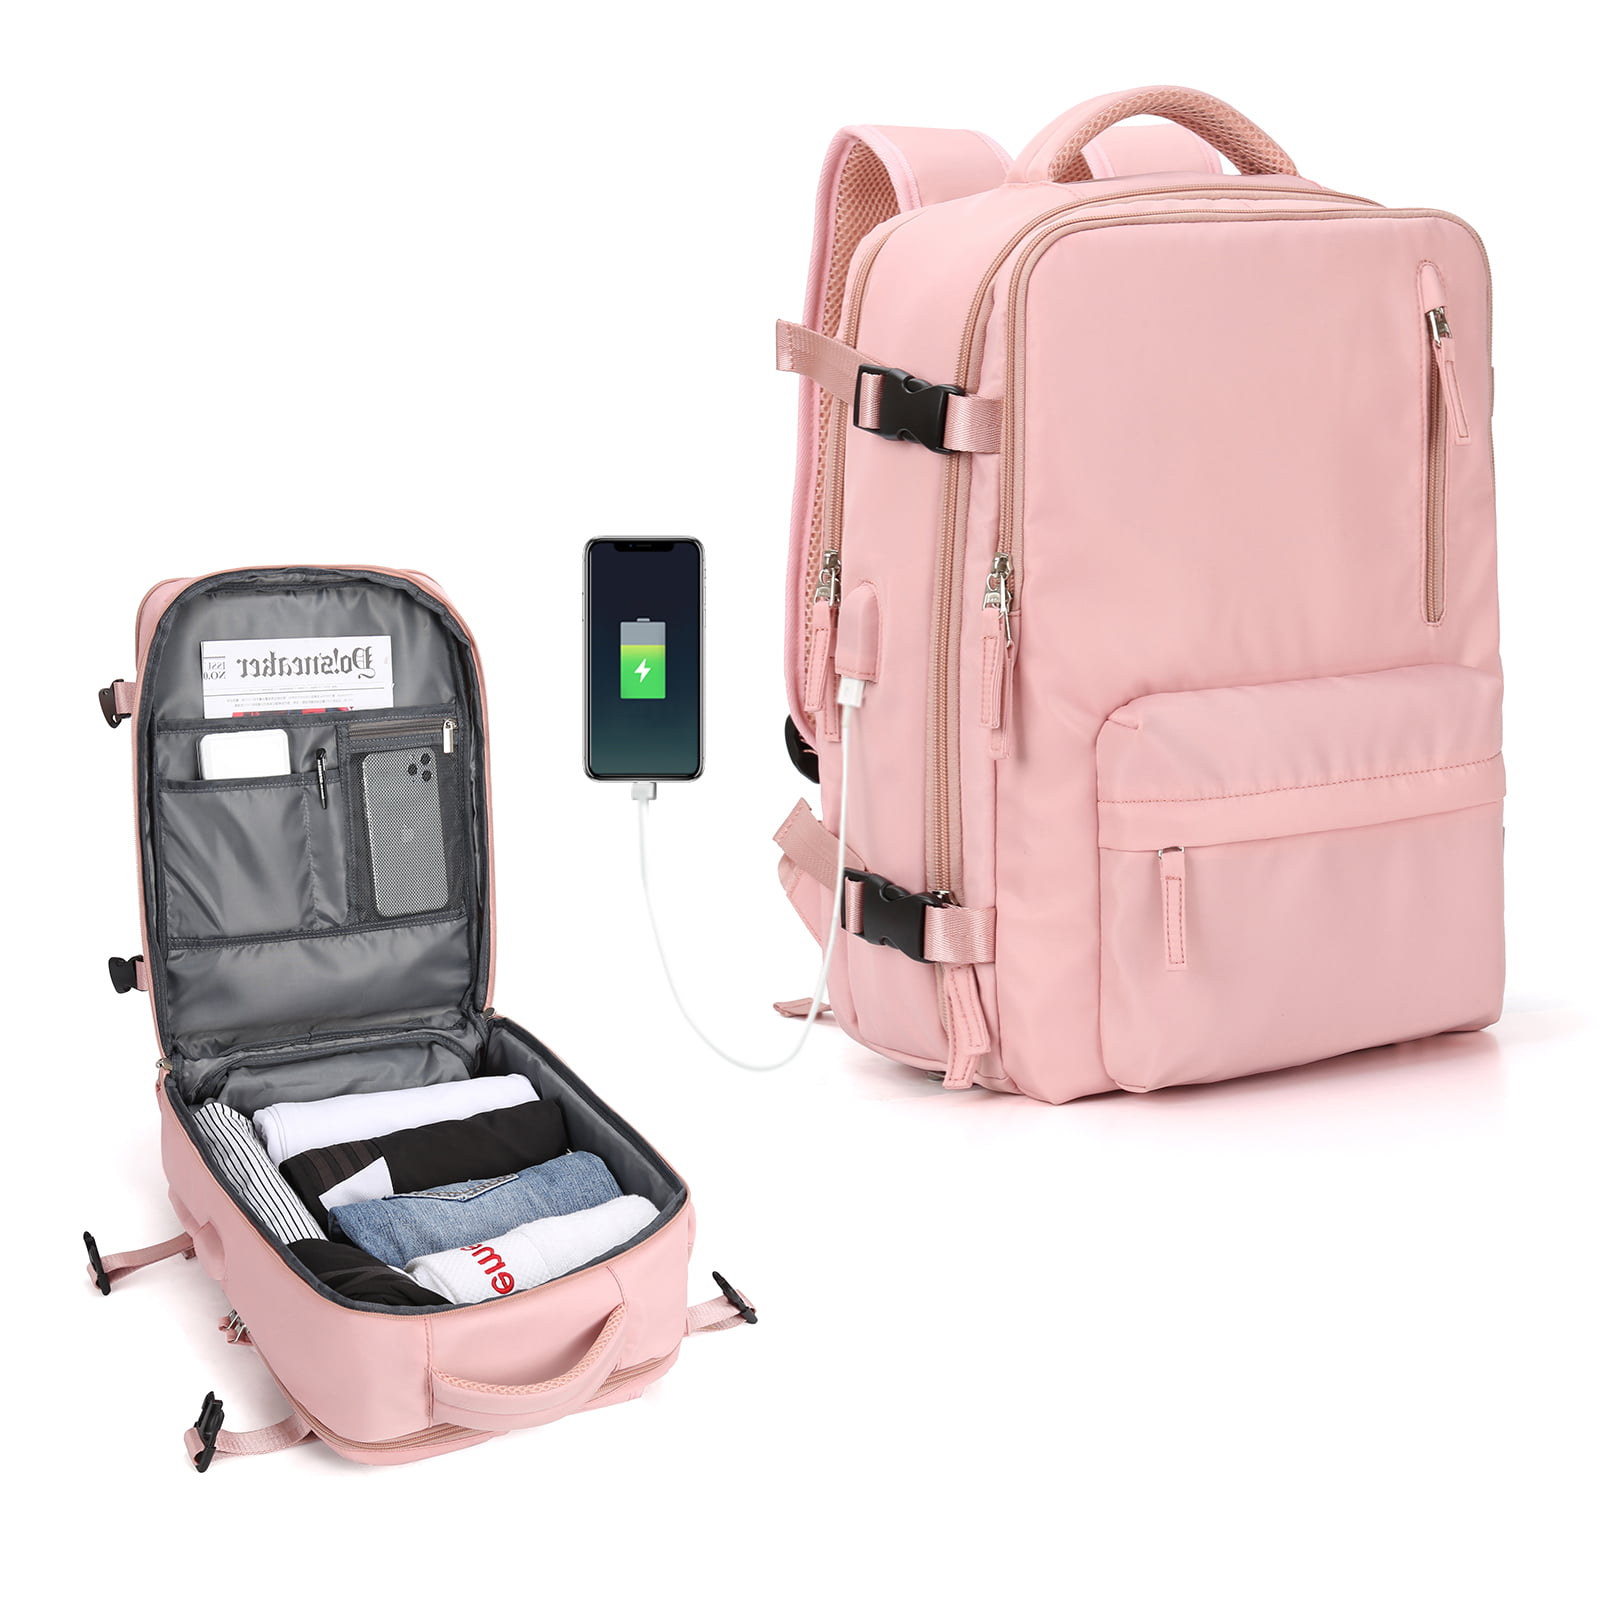 Laptop Bag LIGHT FLIGHT Laptop Backpack for Women Travel Laptop Bag School College Large Computer Daypack Fits 15.6 Inch Pink 